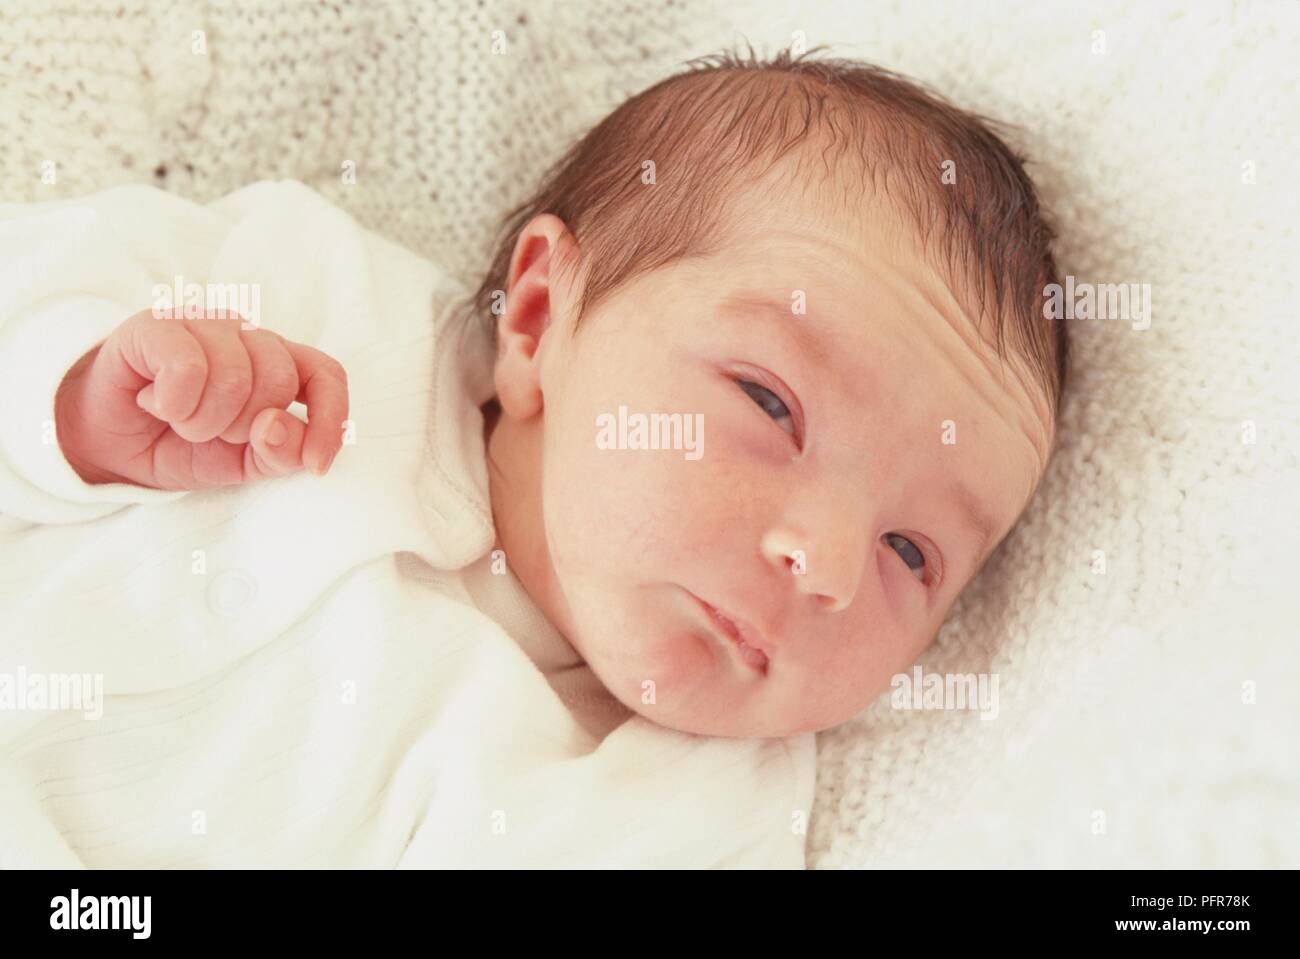 Newborn baby lying on blanket, close-up Stock Photo